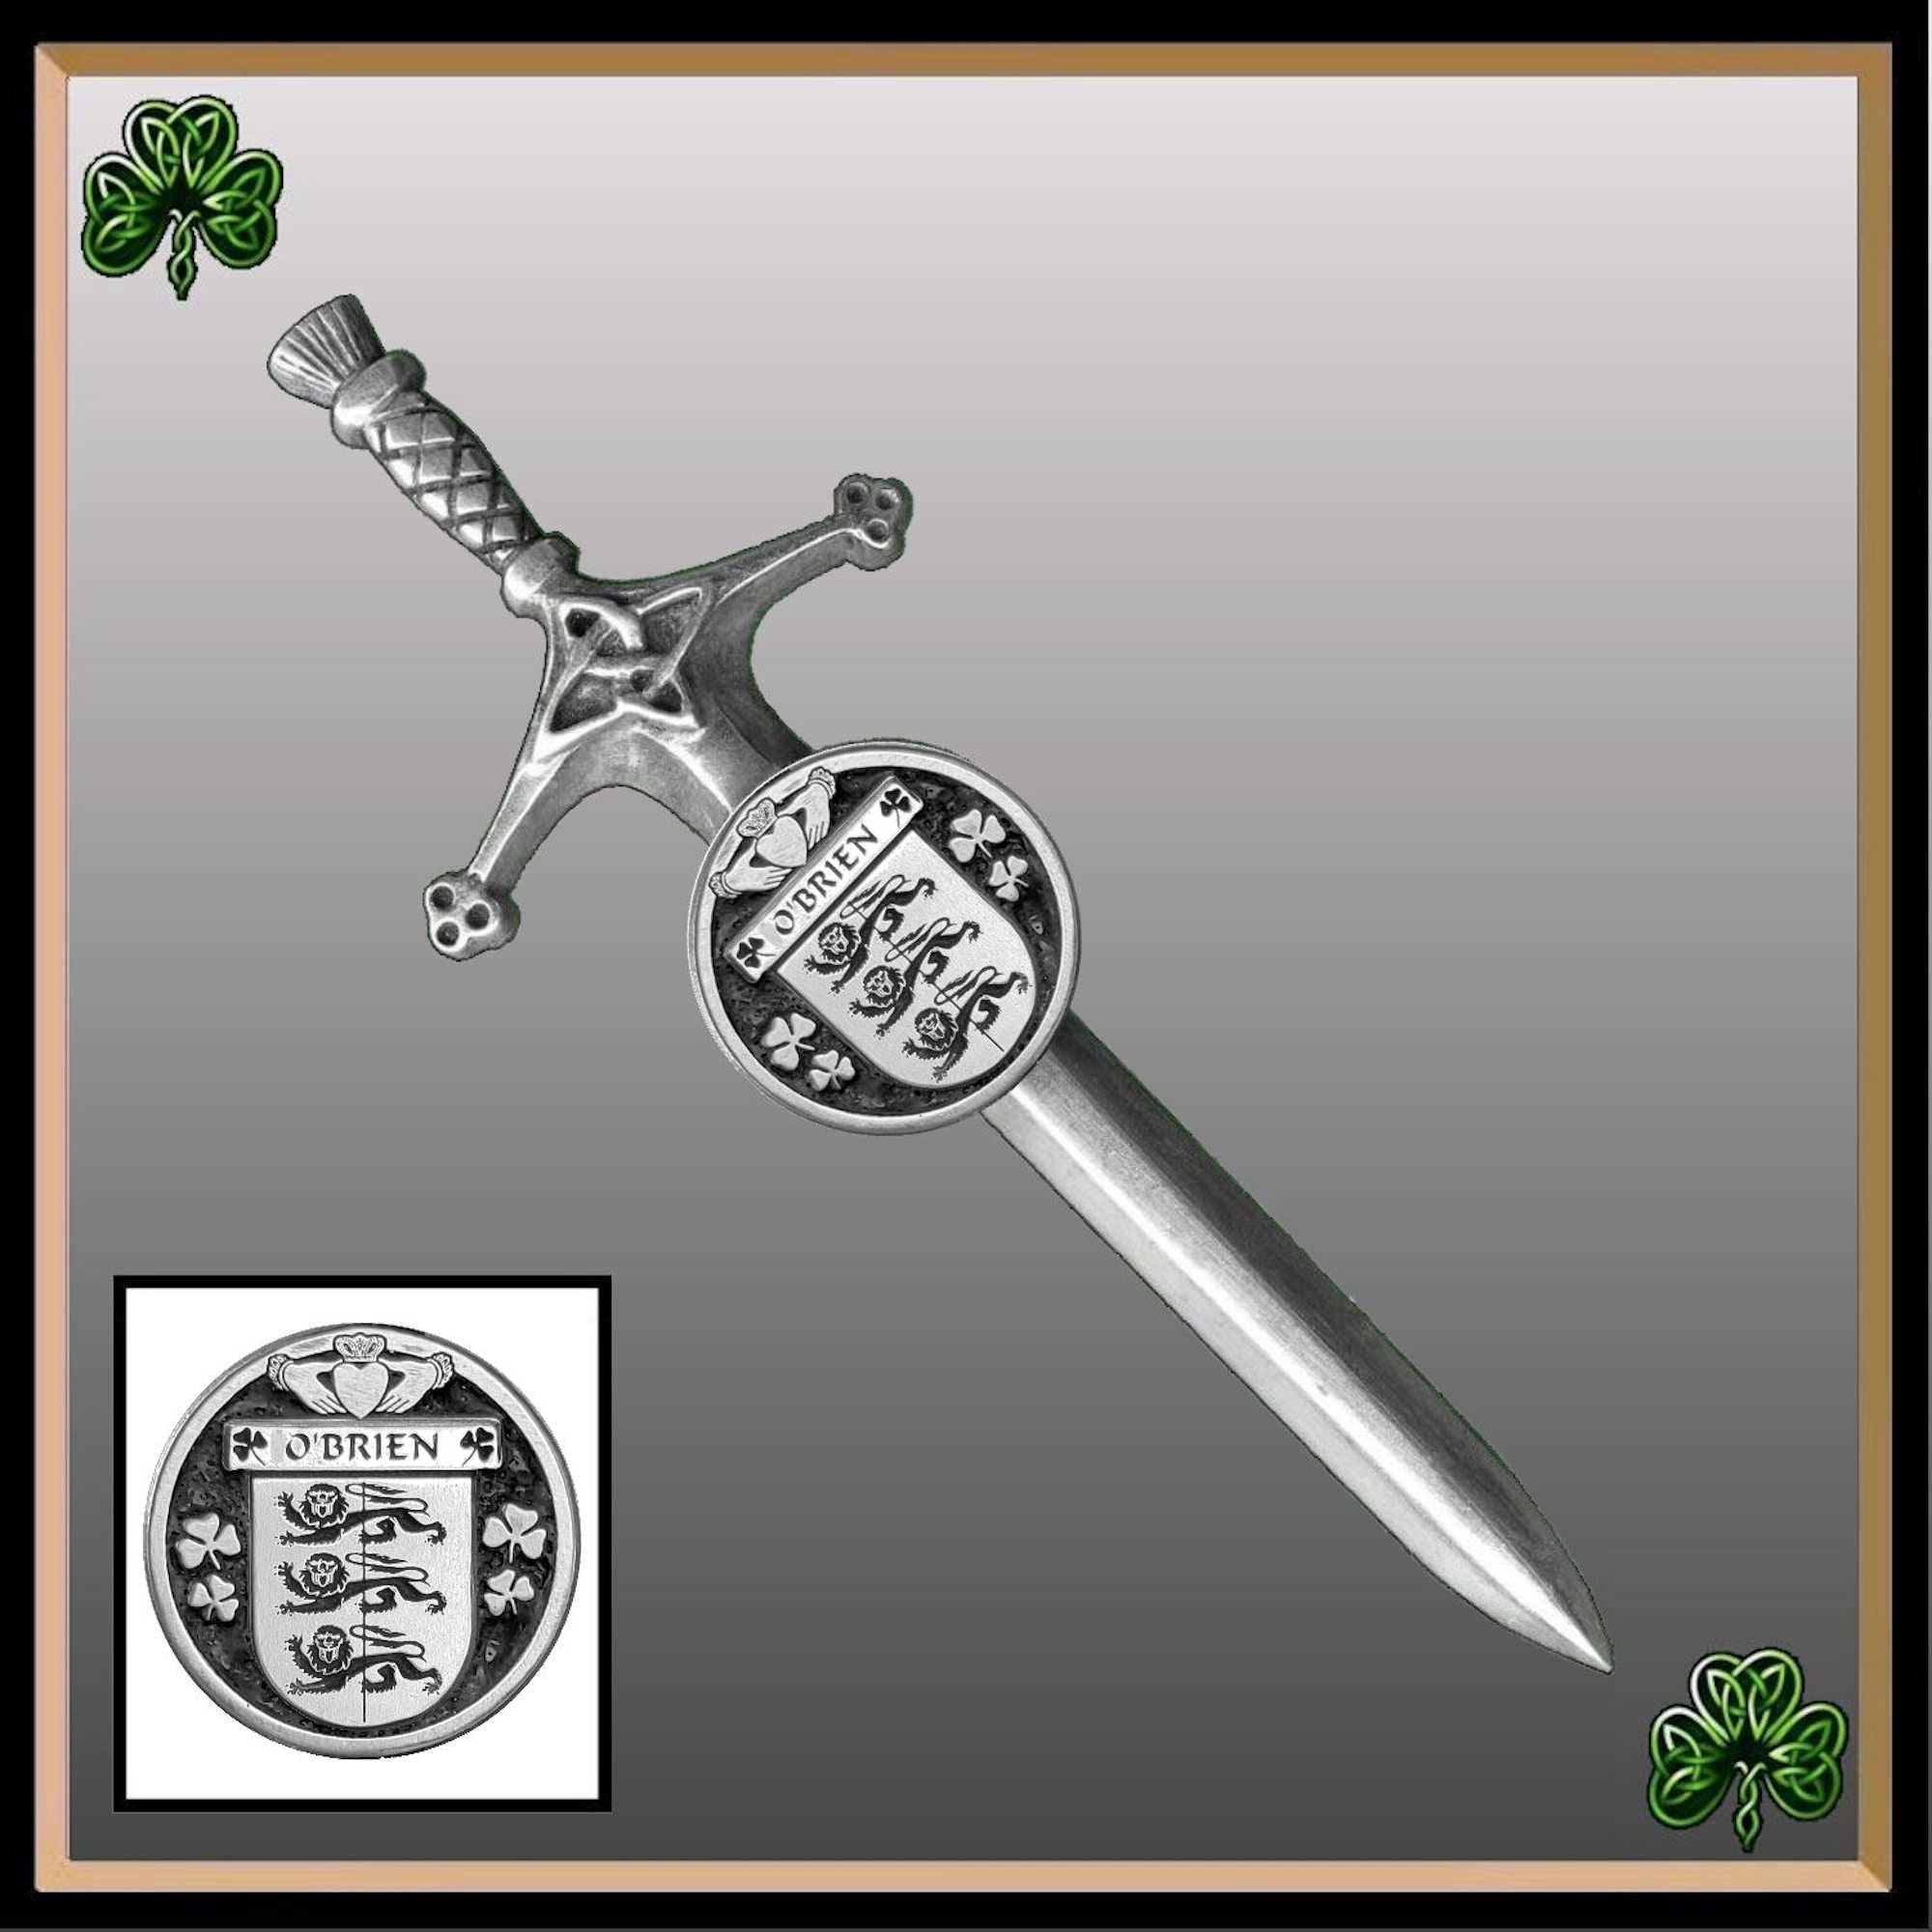 O'Brien Irish Coat of Arms Disk Kilt Pin